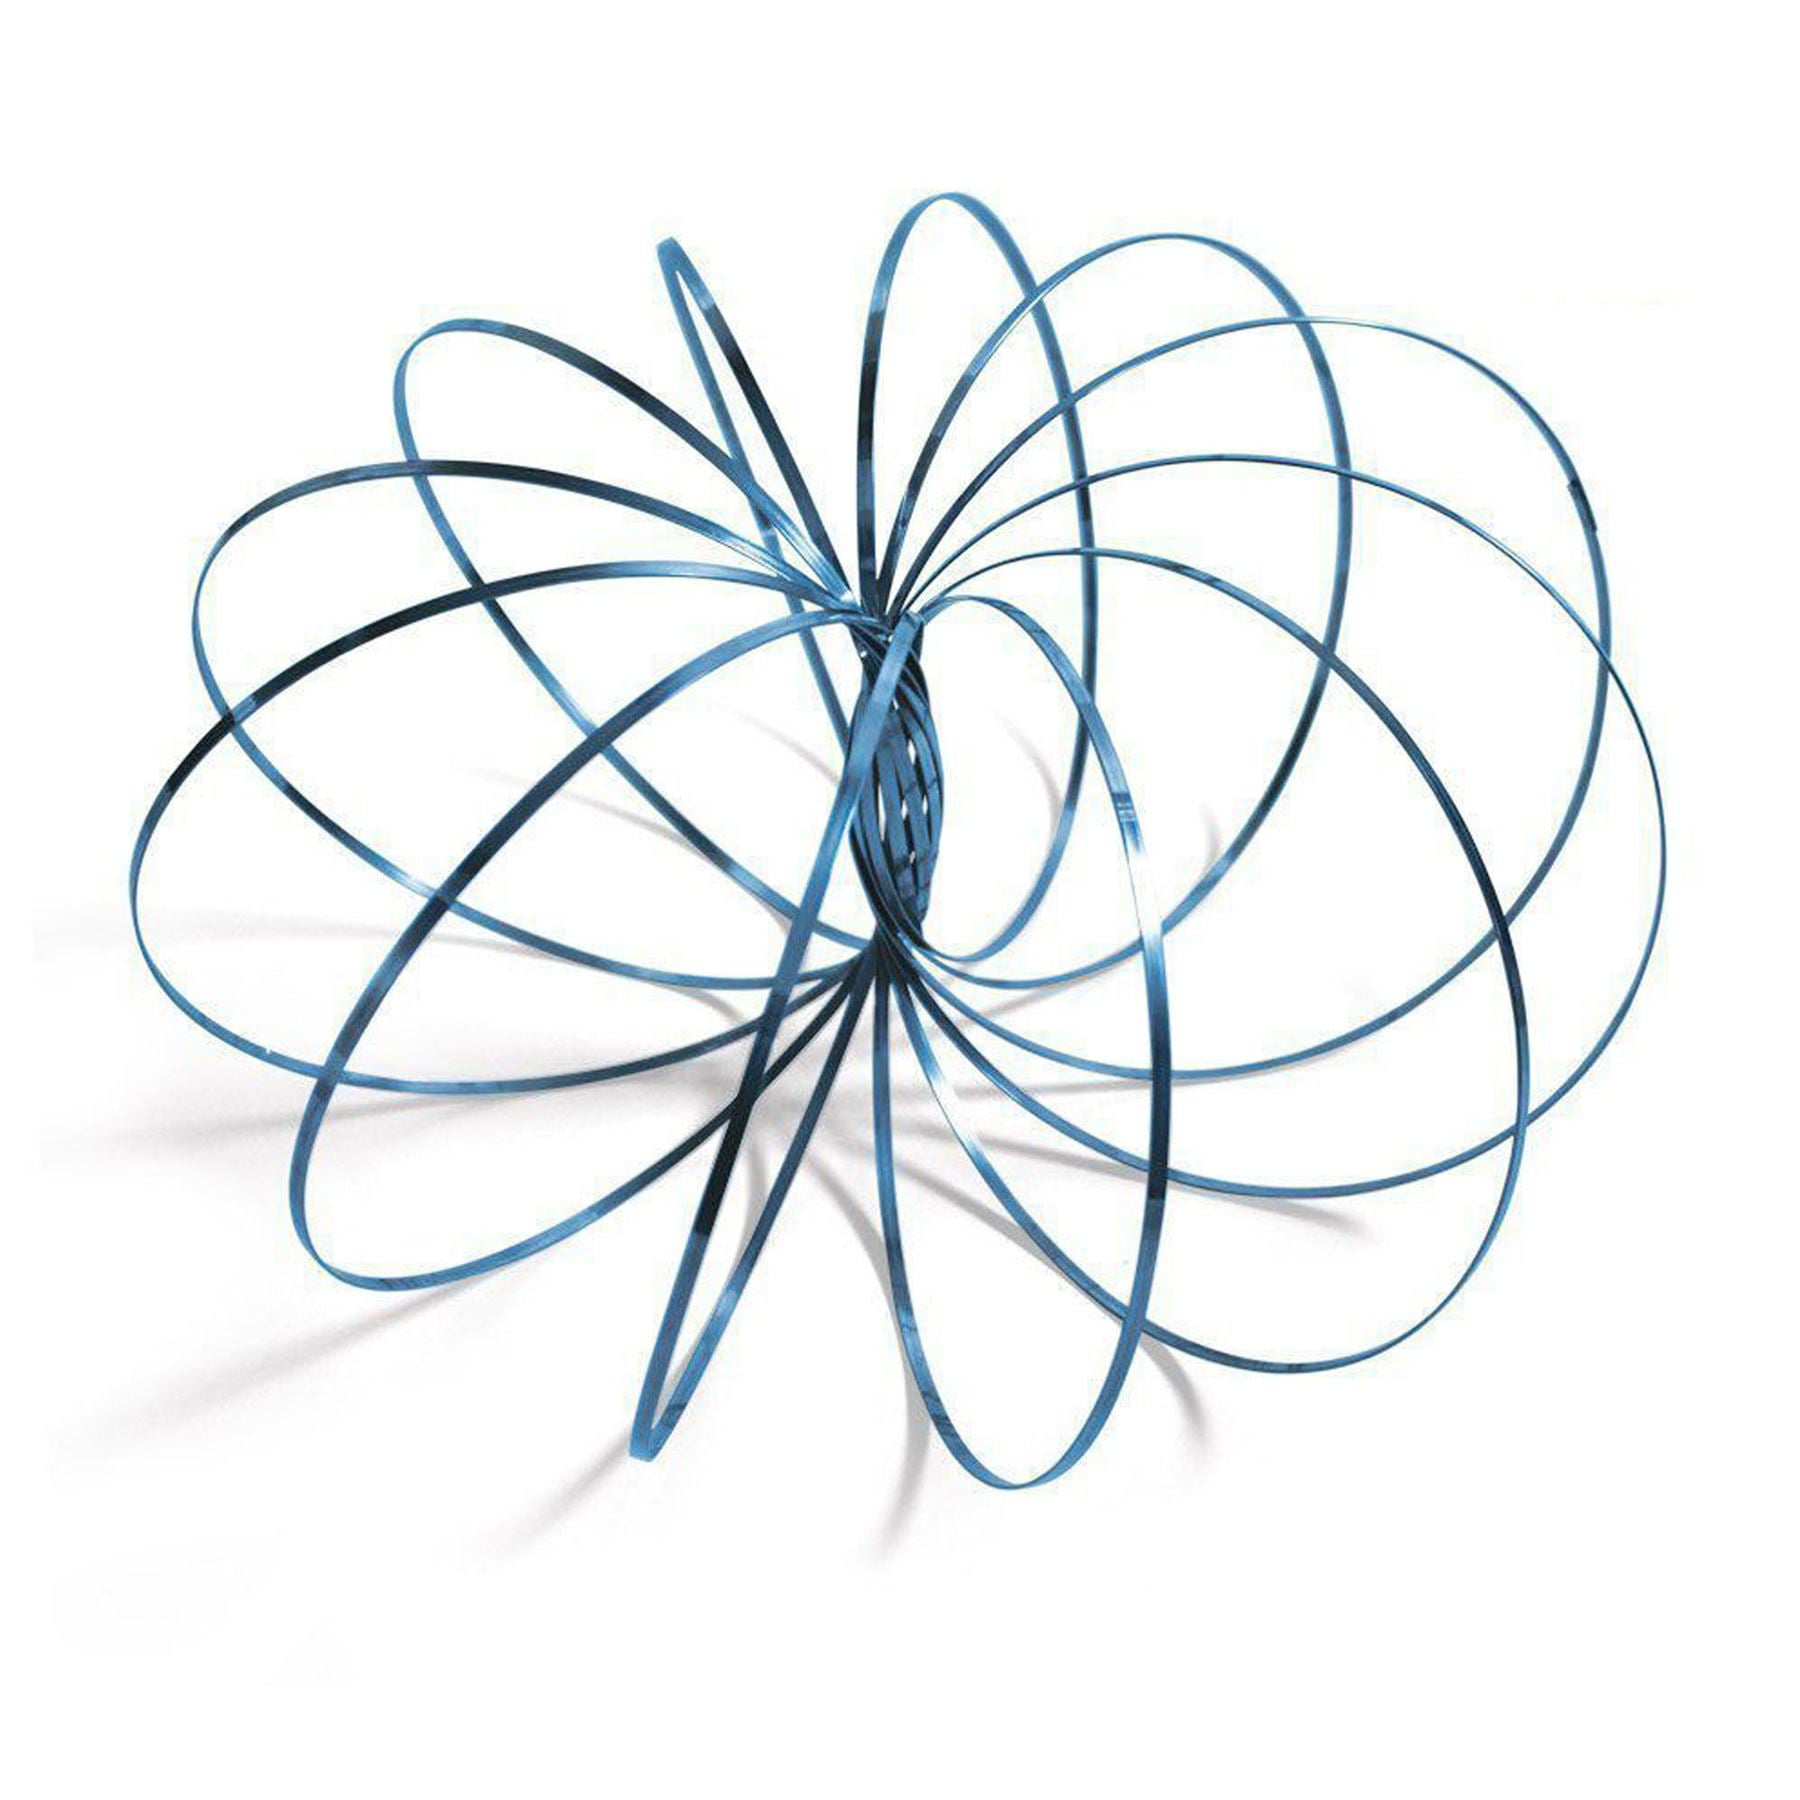 Ring Flow Slinky Fun Kinetic Spring LOT 12 Toys US 